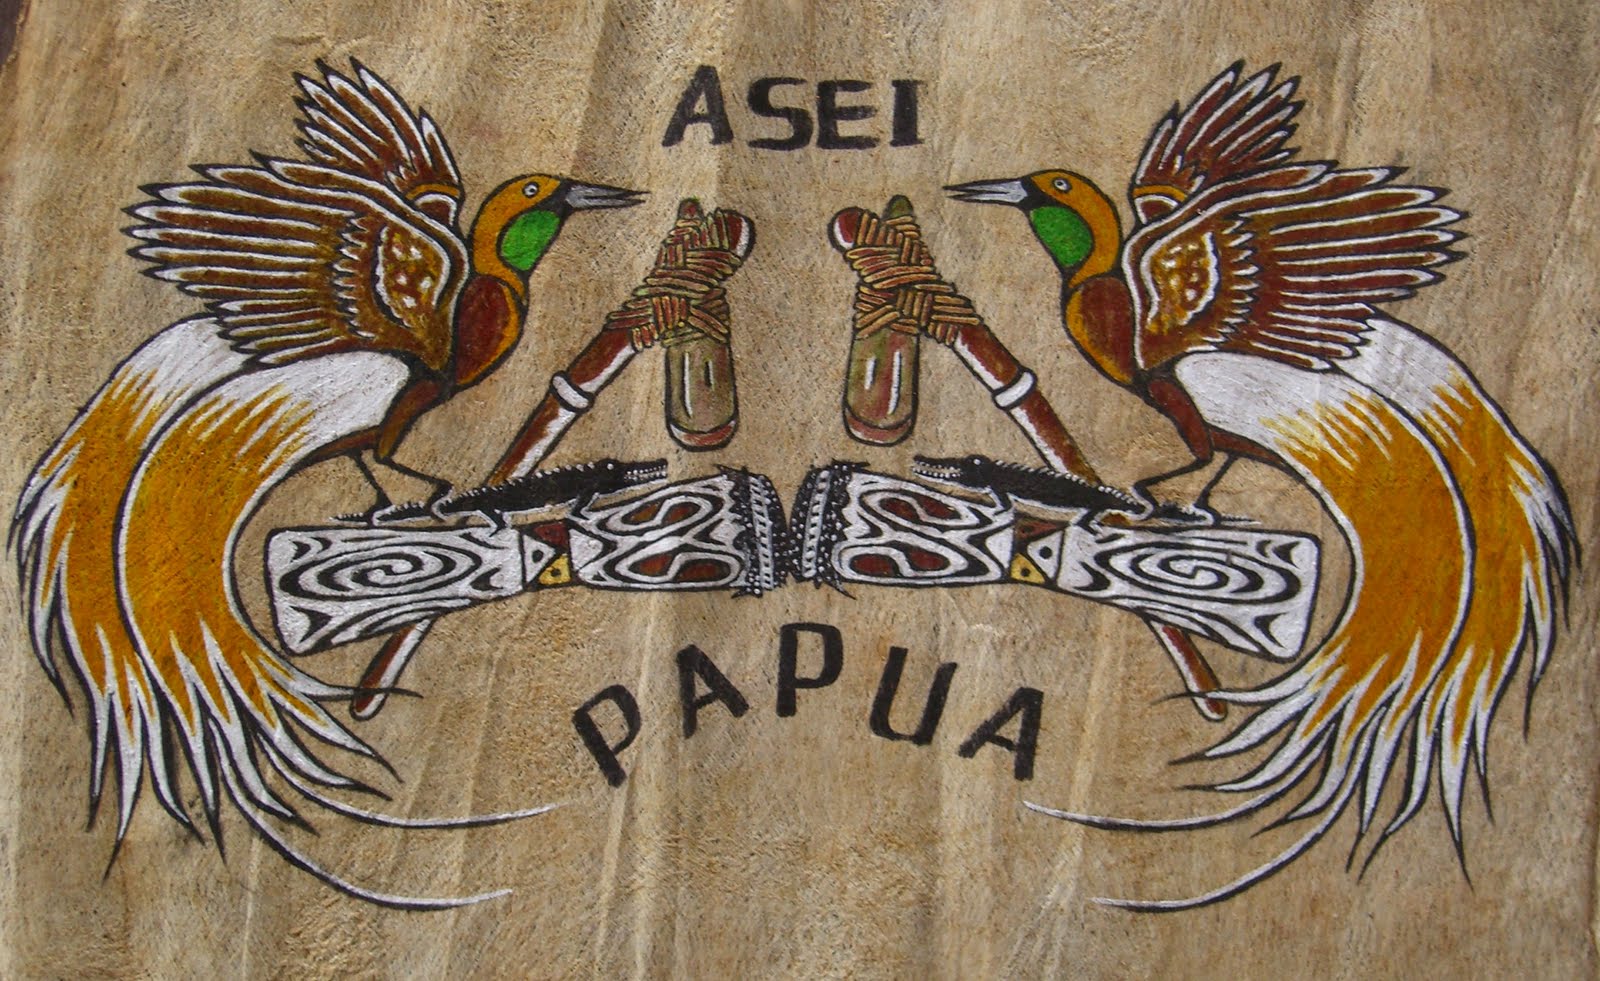 Mengagumi Keindahan Lukisan Kayu di Pulau Asei, Papua